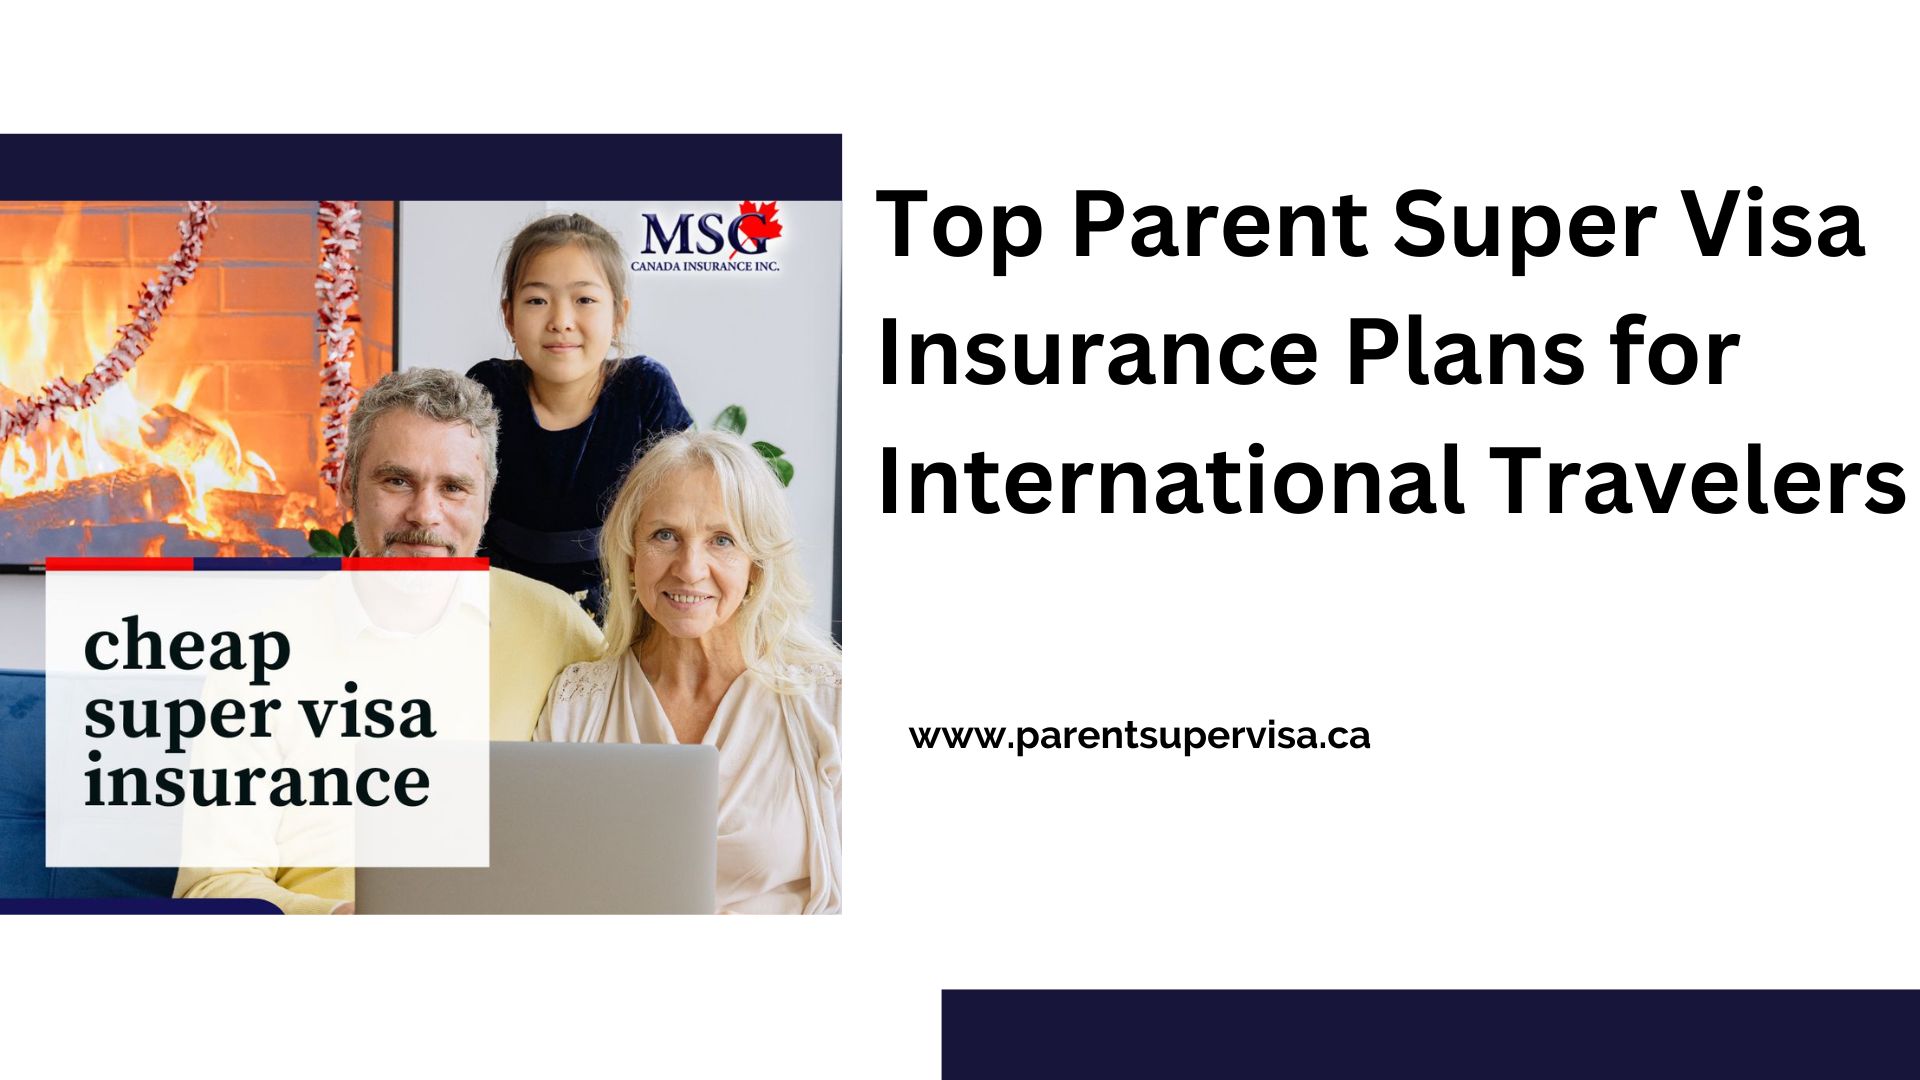 Top Parent Super Visa Insurance Plans for International Travelers